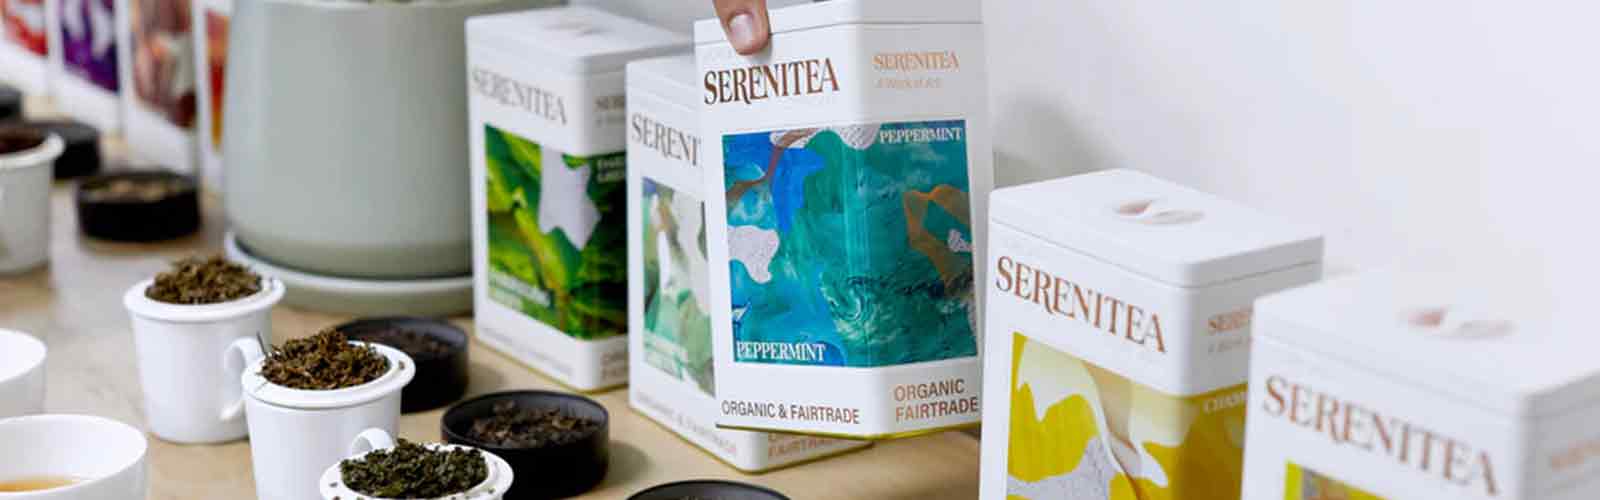 SereniTea Products